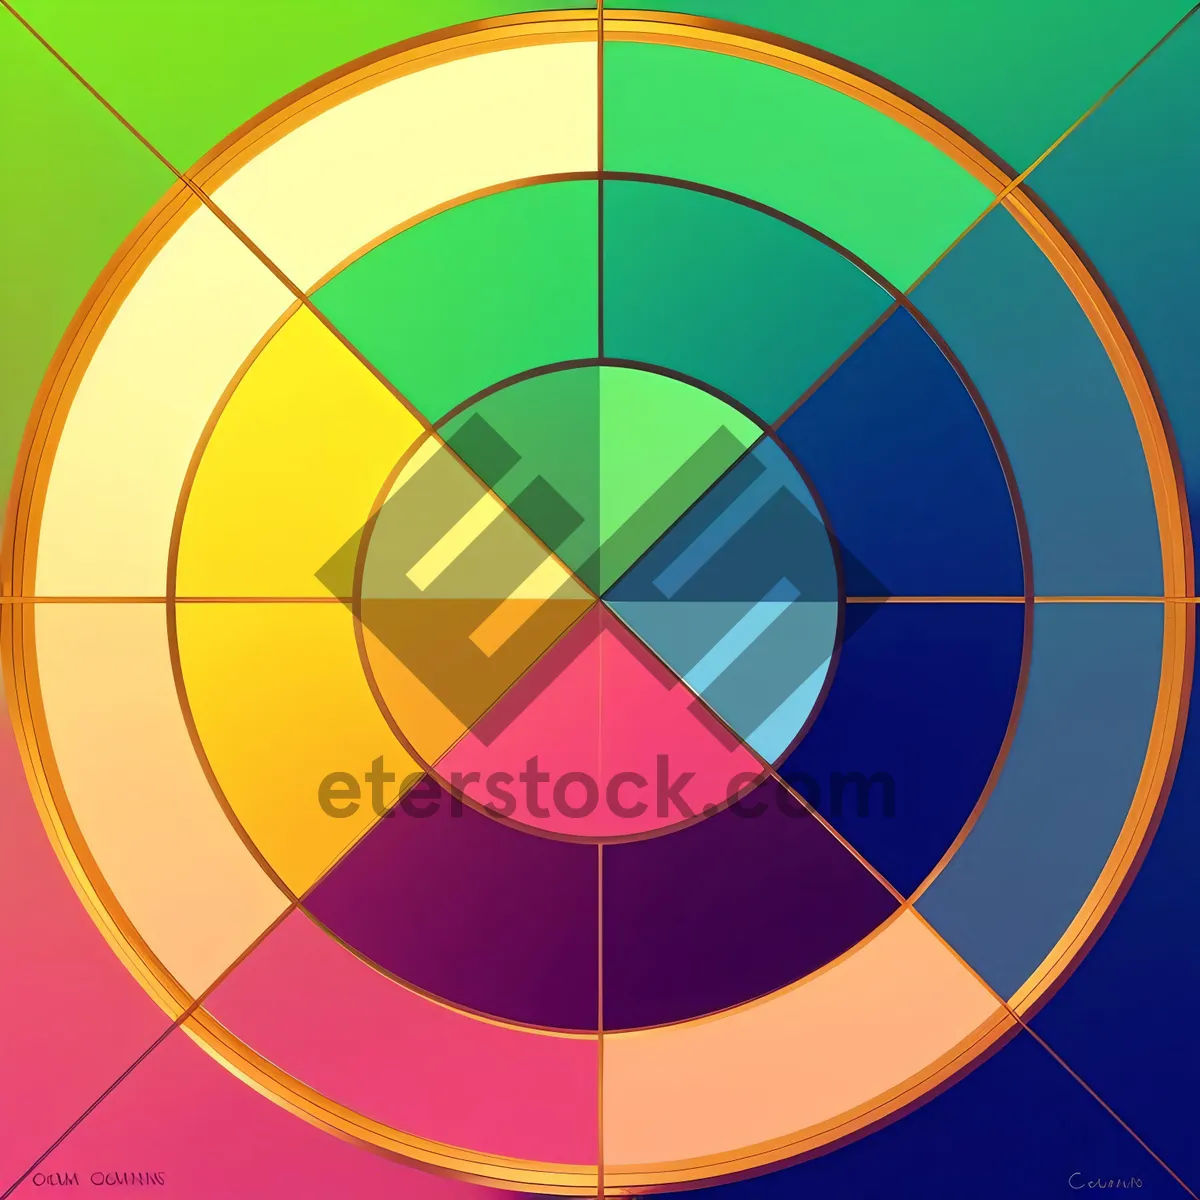 Picture of Colorful Geometric Artwork: Rainbow Circle Design